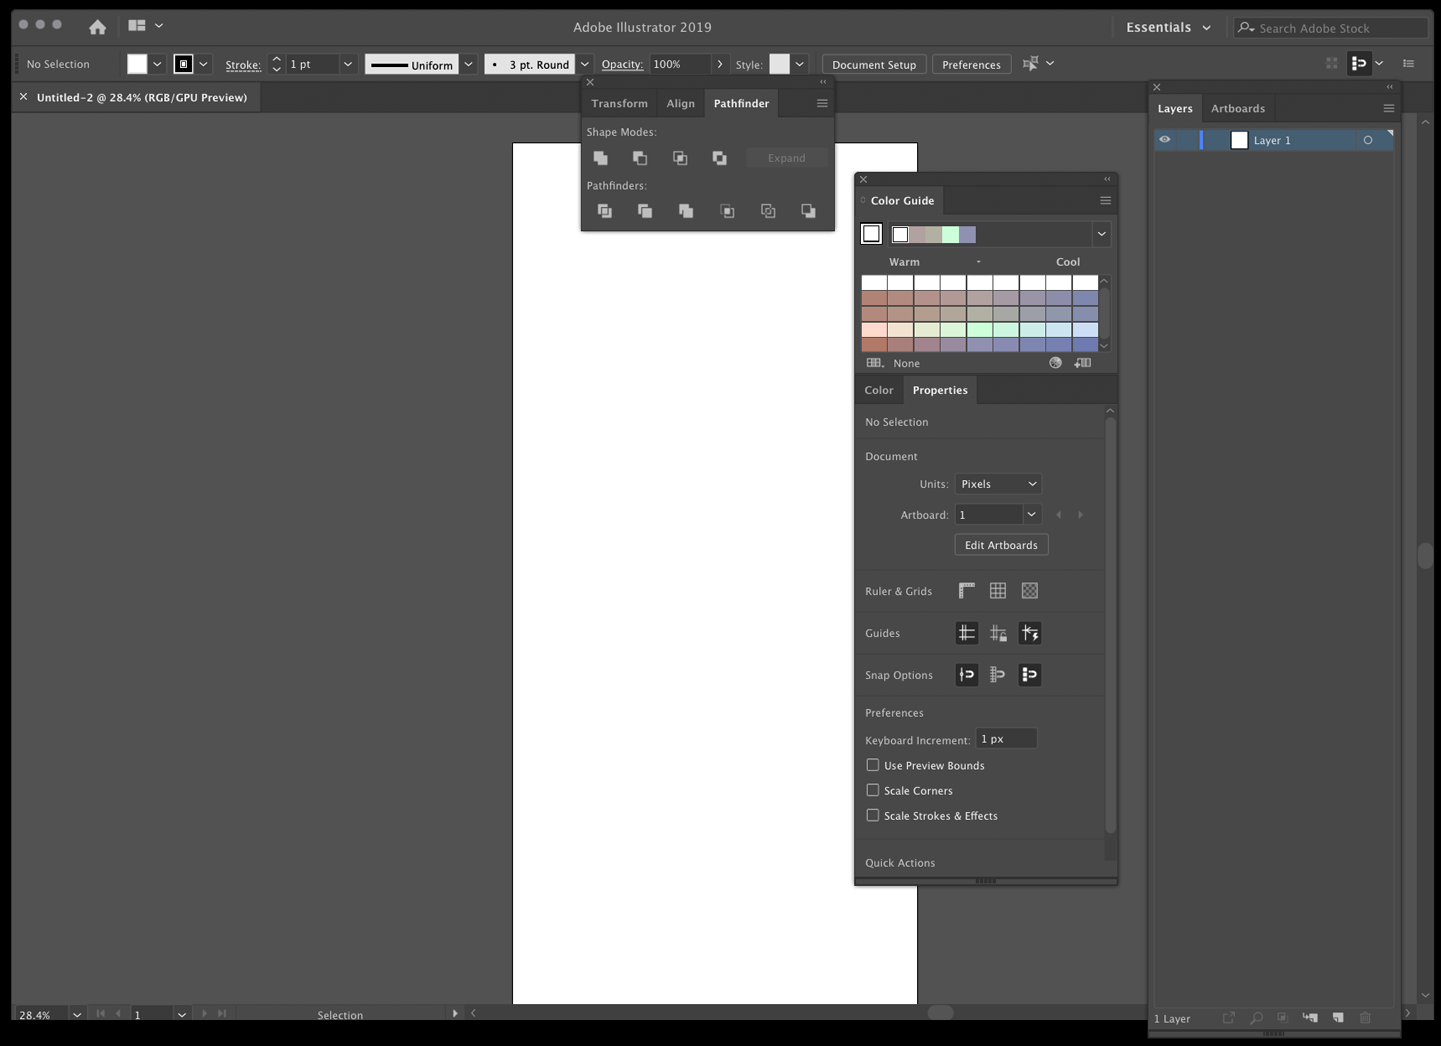 Movable Panels in Adobe Illustrator